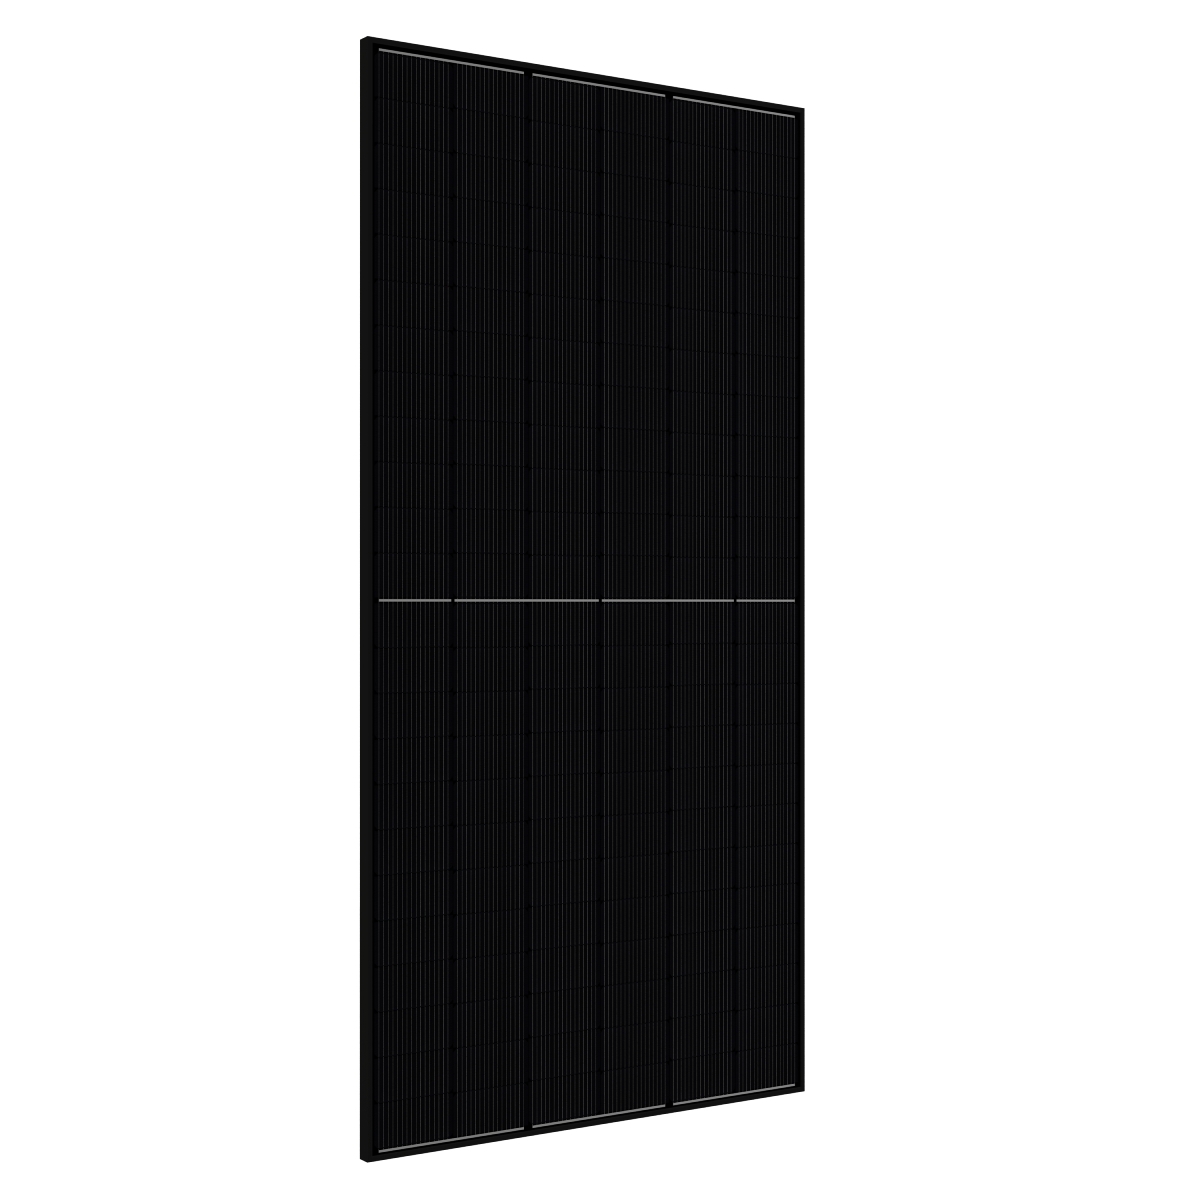 TommaTech 585Wp 144TNFB M10 Topcon Dark Series Solar Panel